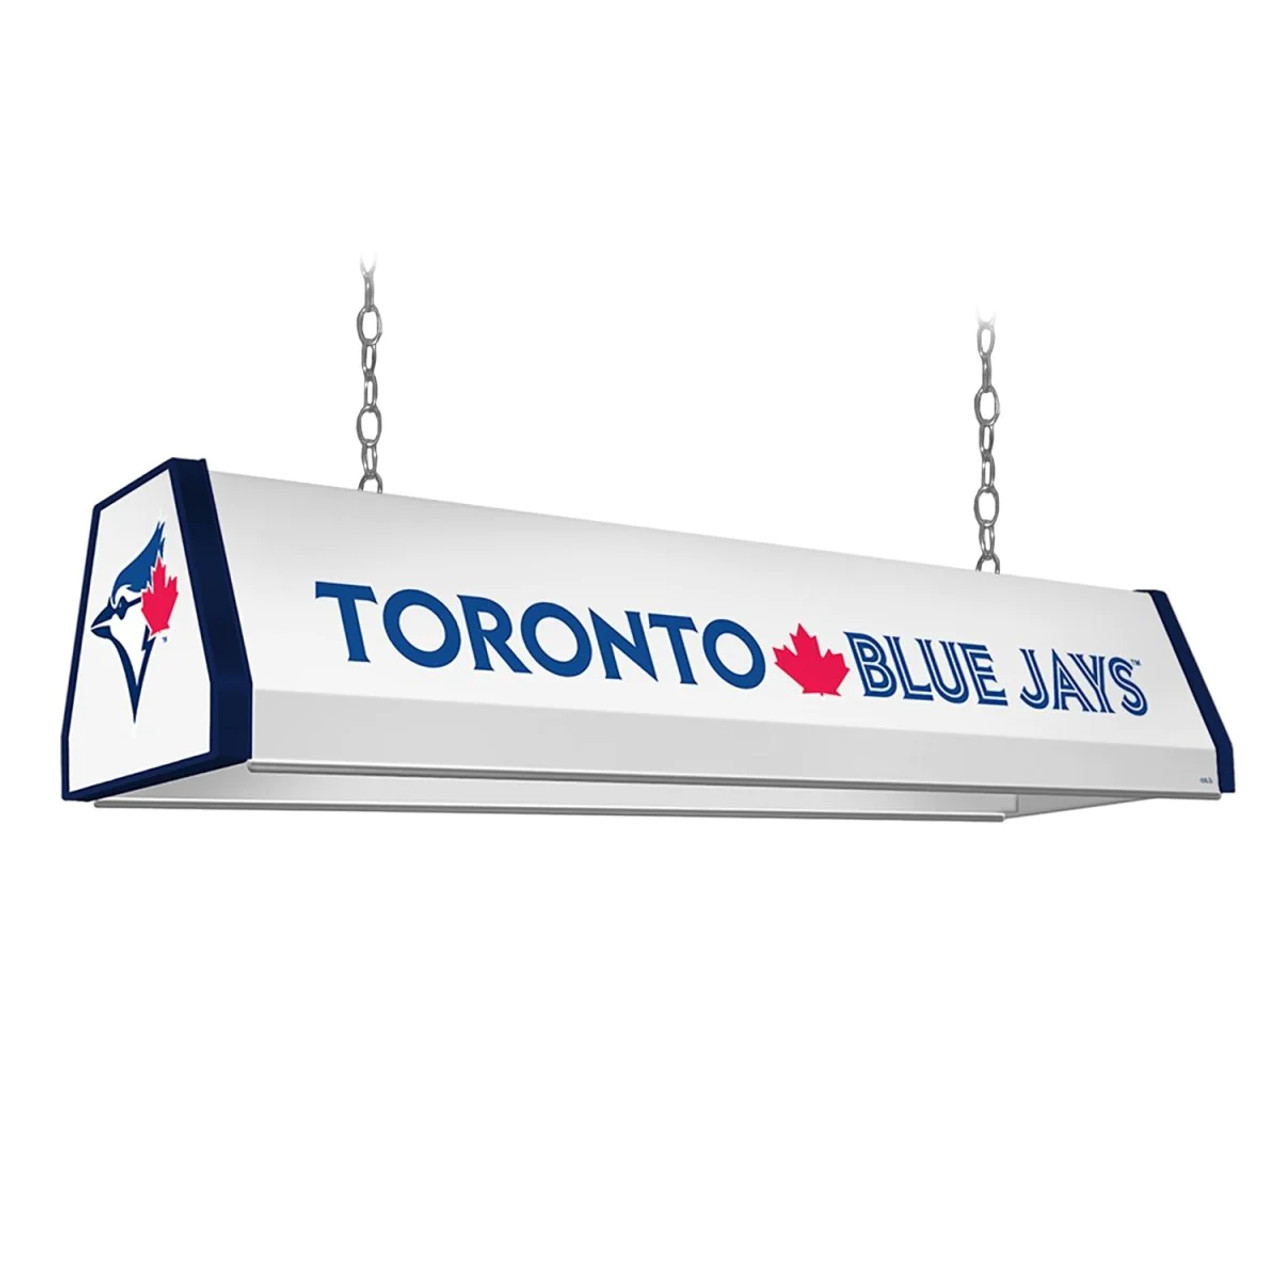 MBBLUE JAYS-310-01A, TOR, Toronto Blue, Jays,  Standard, Billiard, Pool, Table, Light, Lamp, "A" Version, MLB, The Fan-Brand, 704384966616